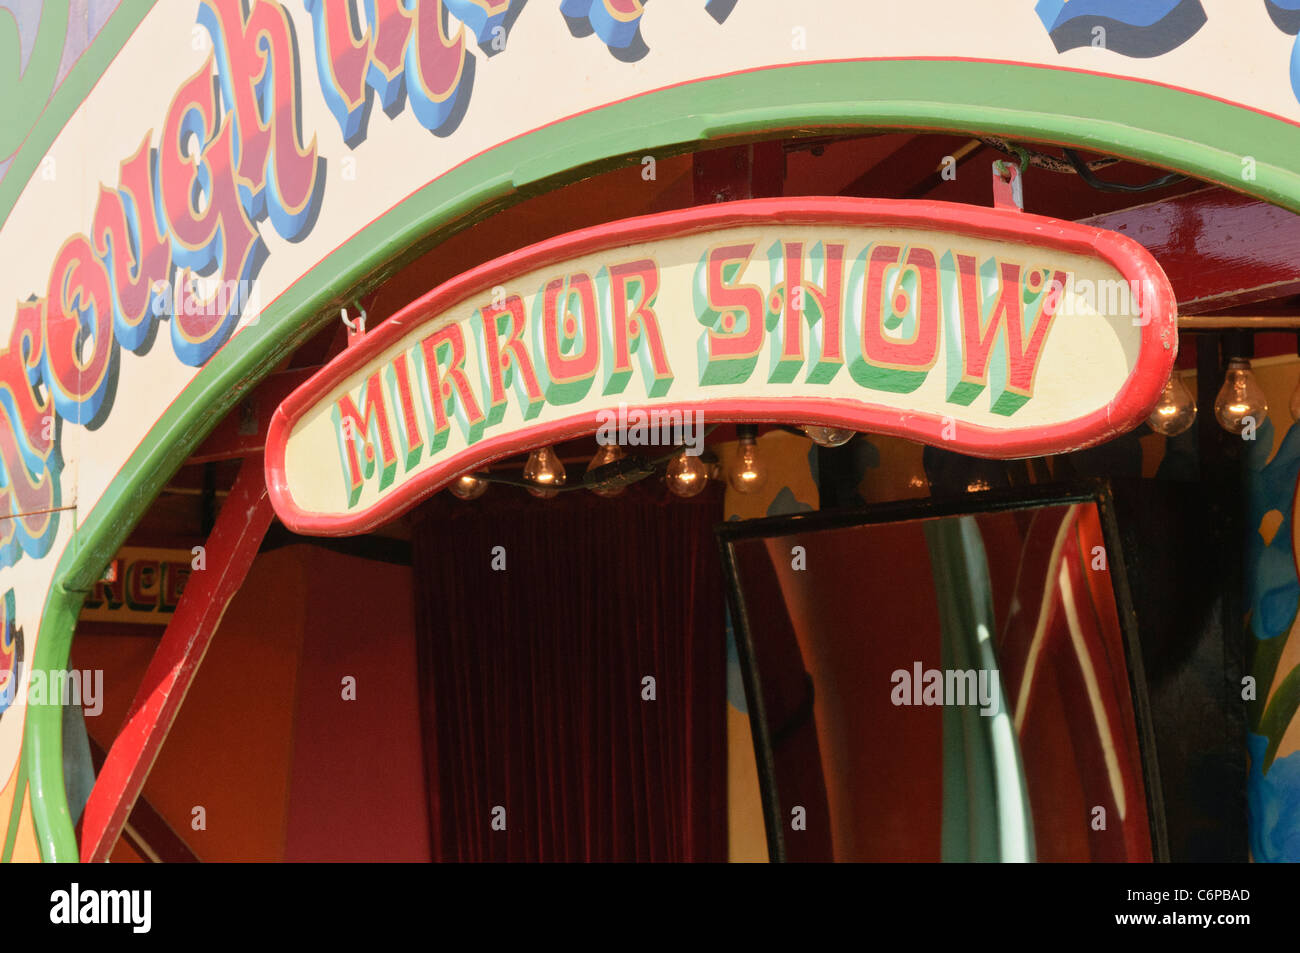 Mirror show at an old fashioned fun fair Stock Photo